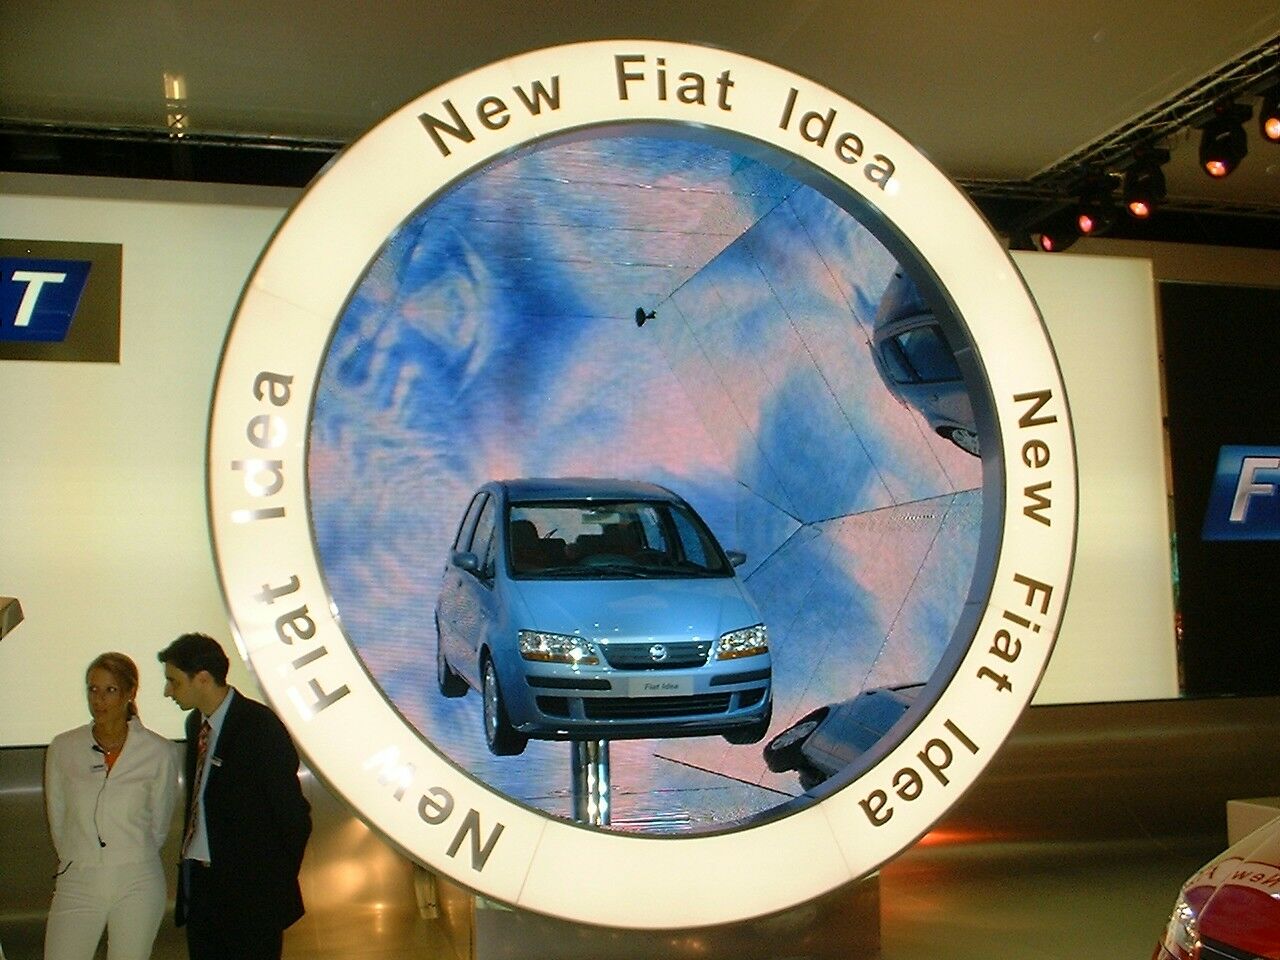 Fiat Idea at the 2003 Frankfurt Motor Show